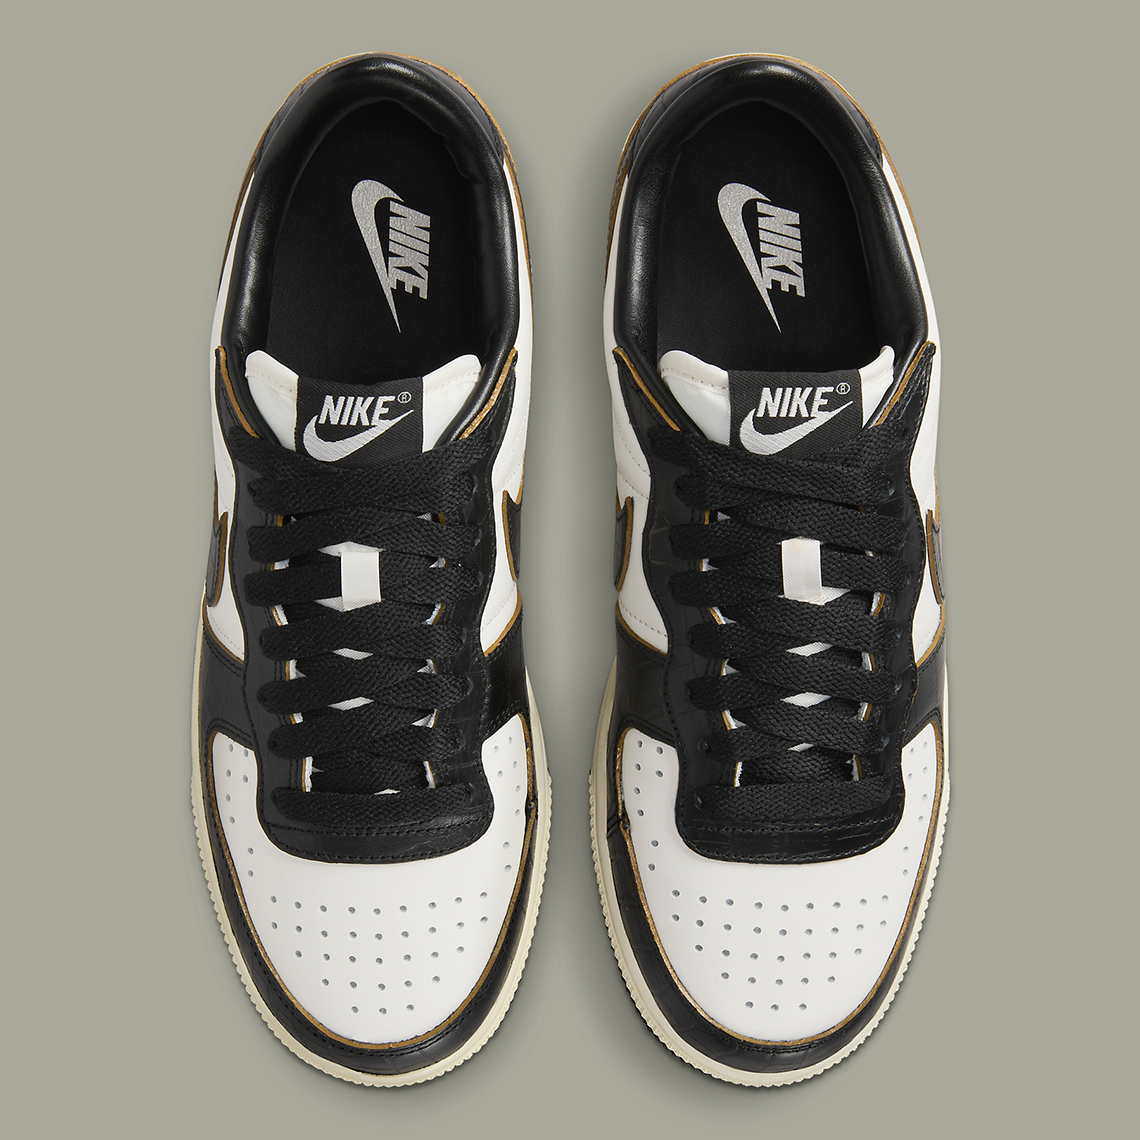 Nike Terminator Low Black Croc Fq8127 030 1